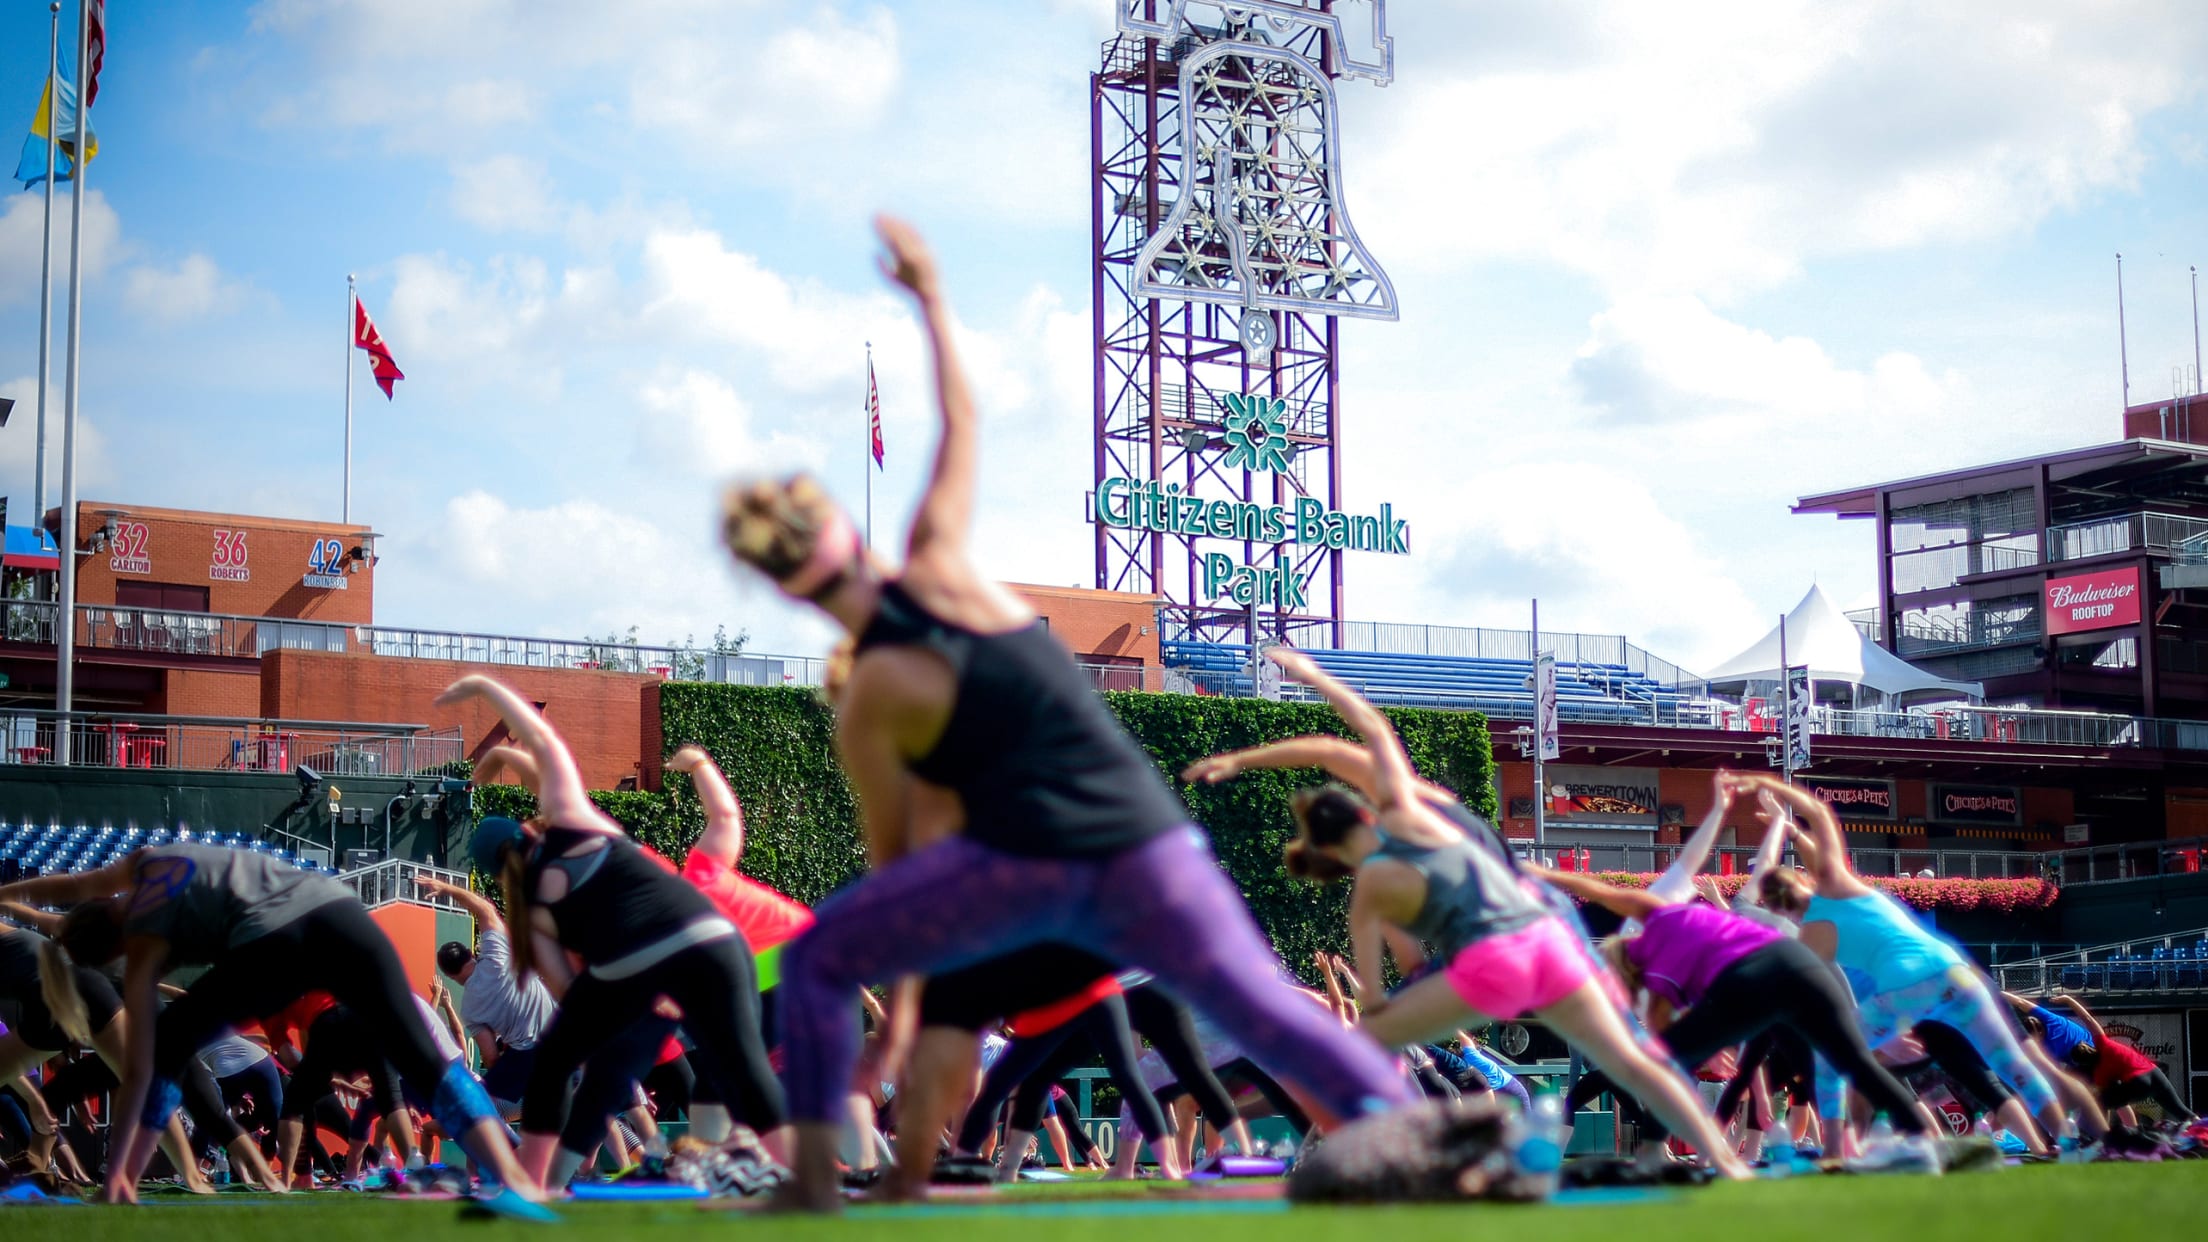 PHILADELPHIA PARKS & RECREATION on Tumblr: Outdoor Yoga in Philly